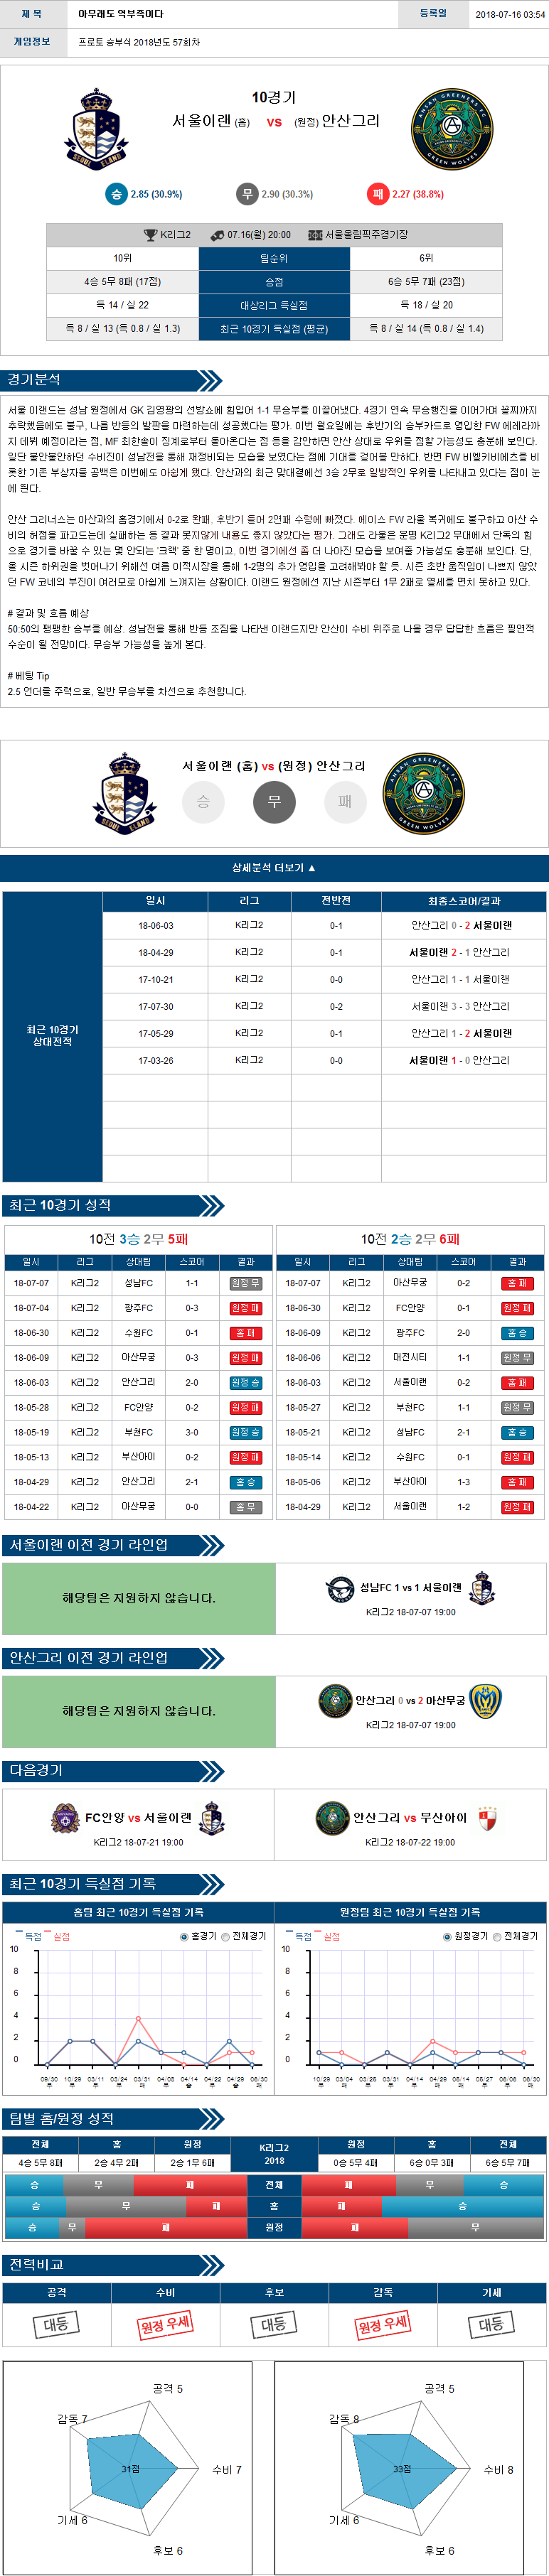 KOR D2 7월16일 20:00 서울이랜 vs 안산그리 먹튀 검증소 분석픽